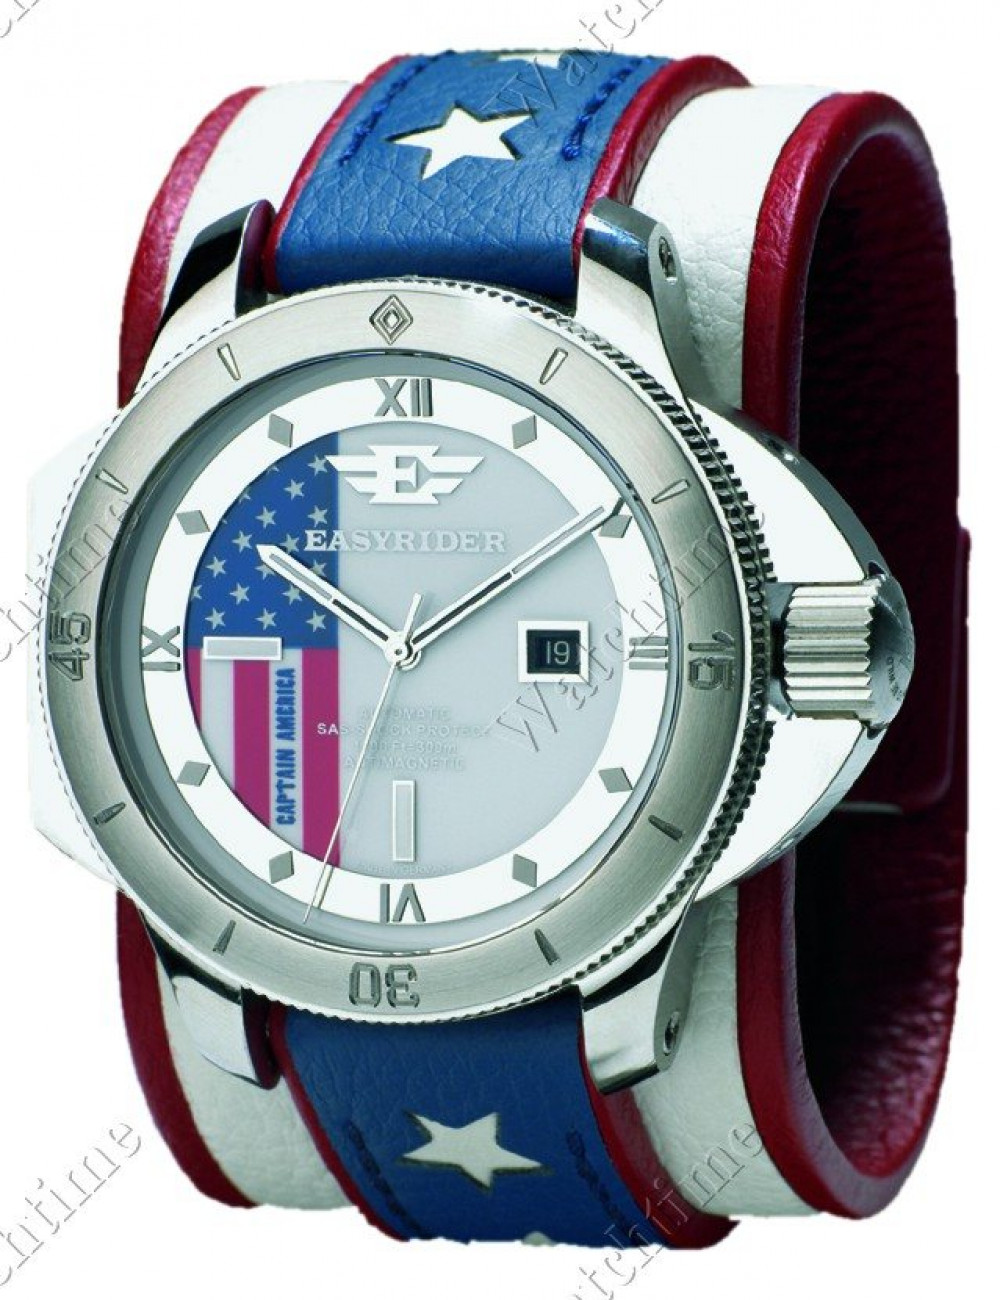 Zegarek firmy Easyrider, model Captain America